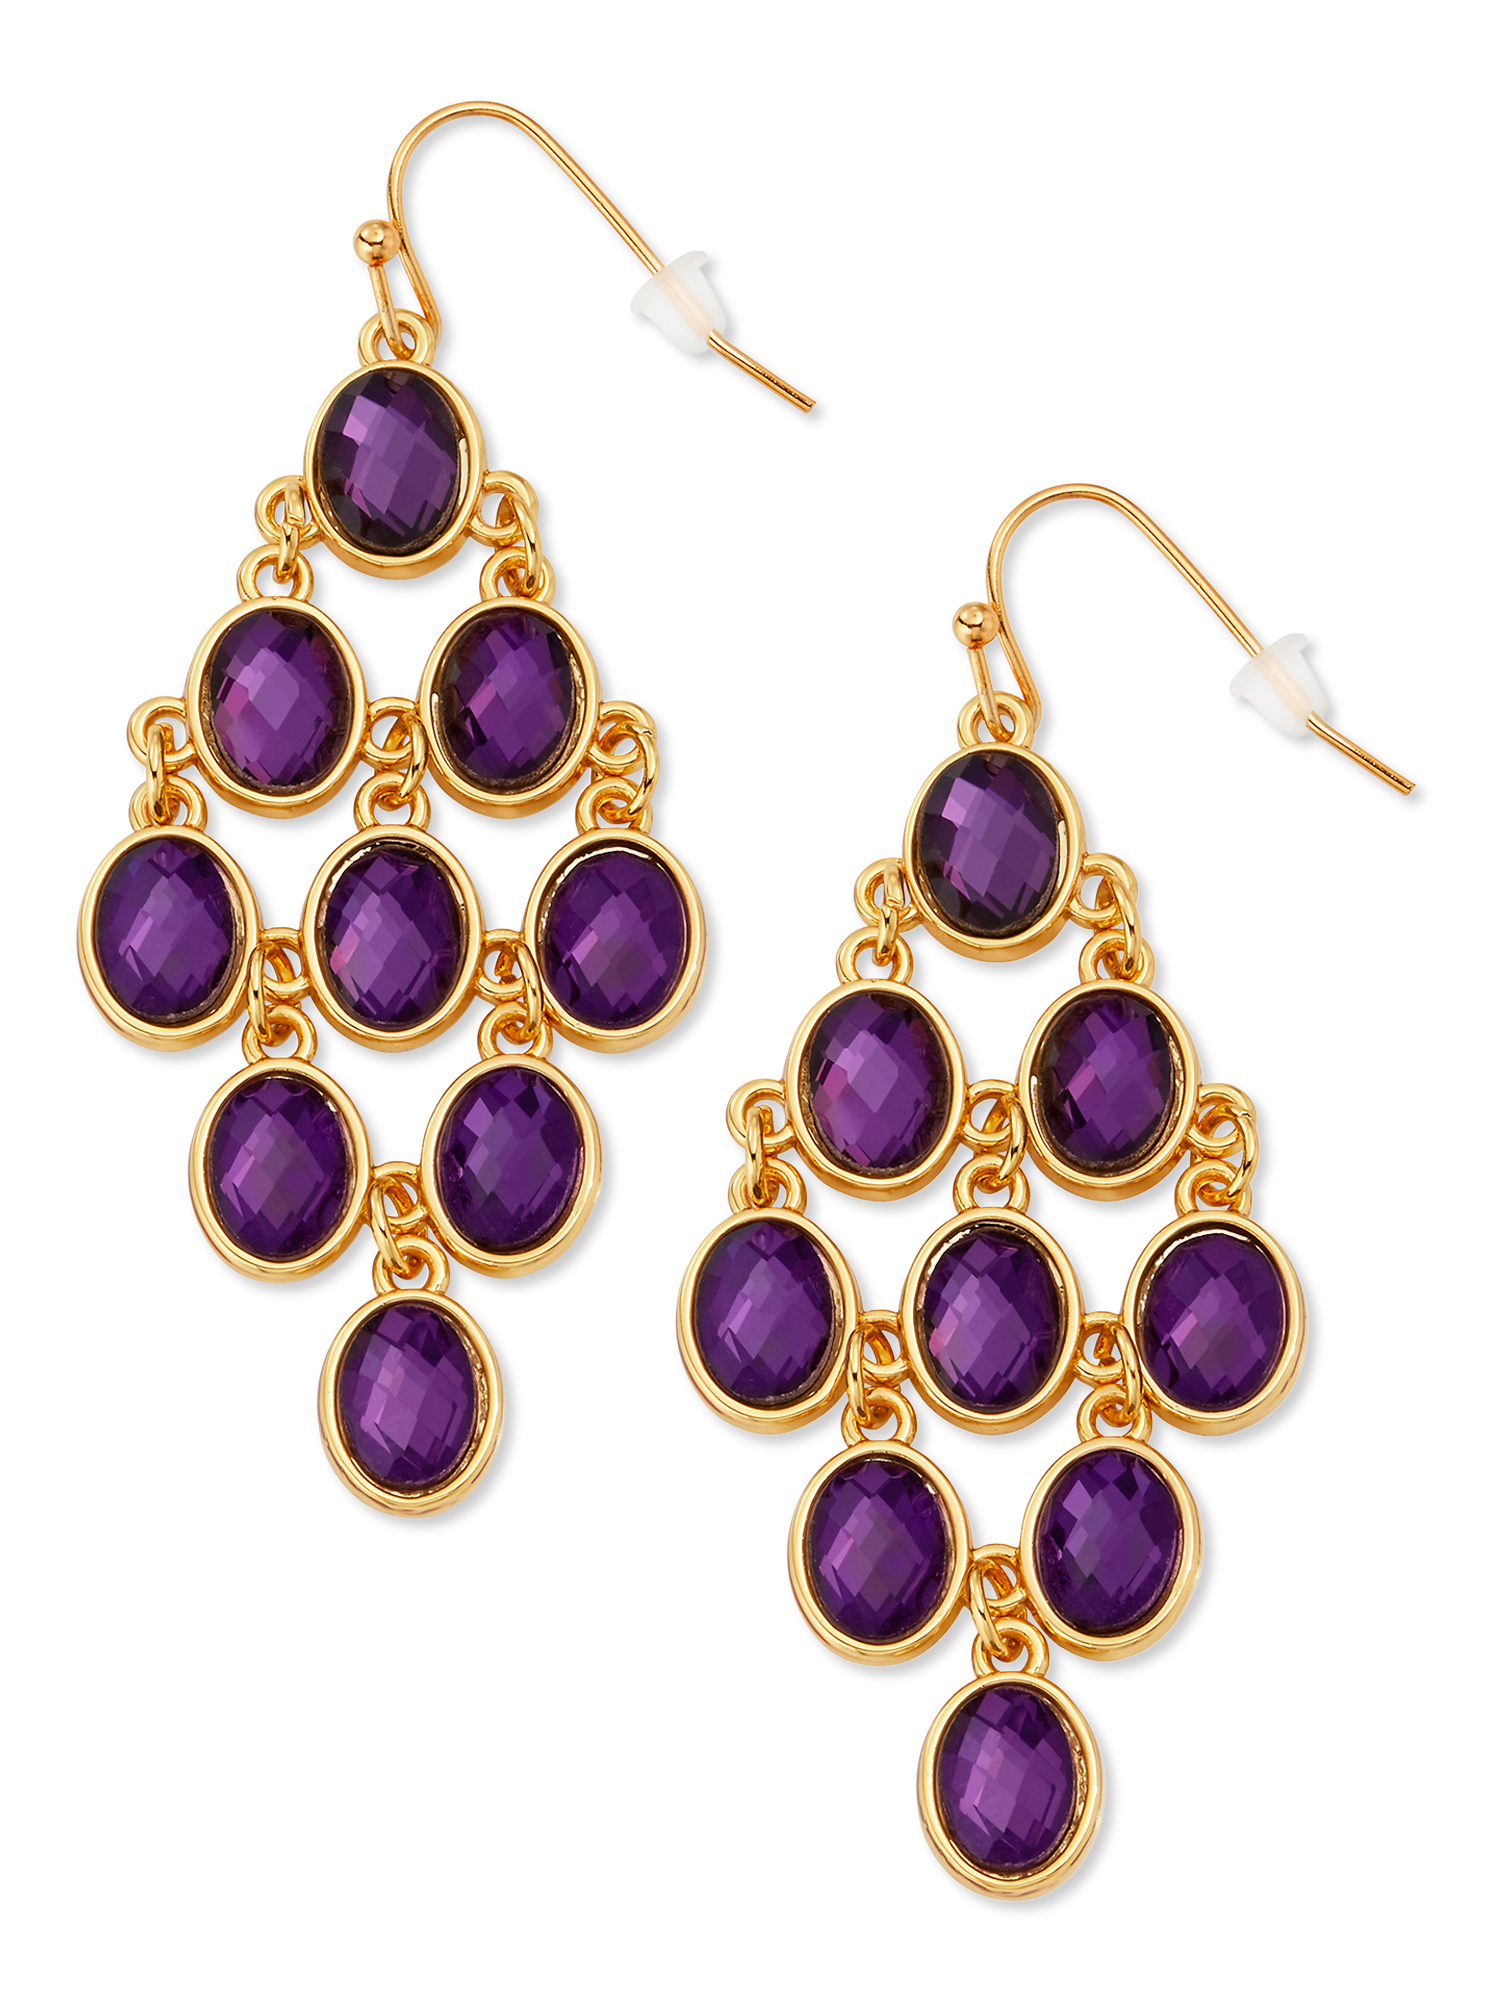 Scoop Womens Brass Yellow Gold-Plated Purple Stone Chandelier Dangle Earrings - image 1 of 3